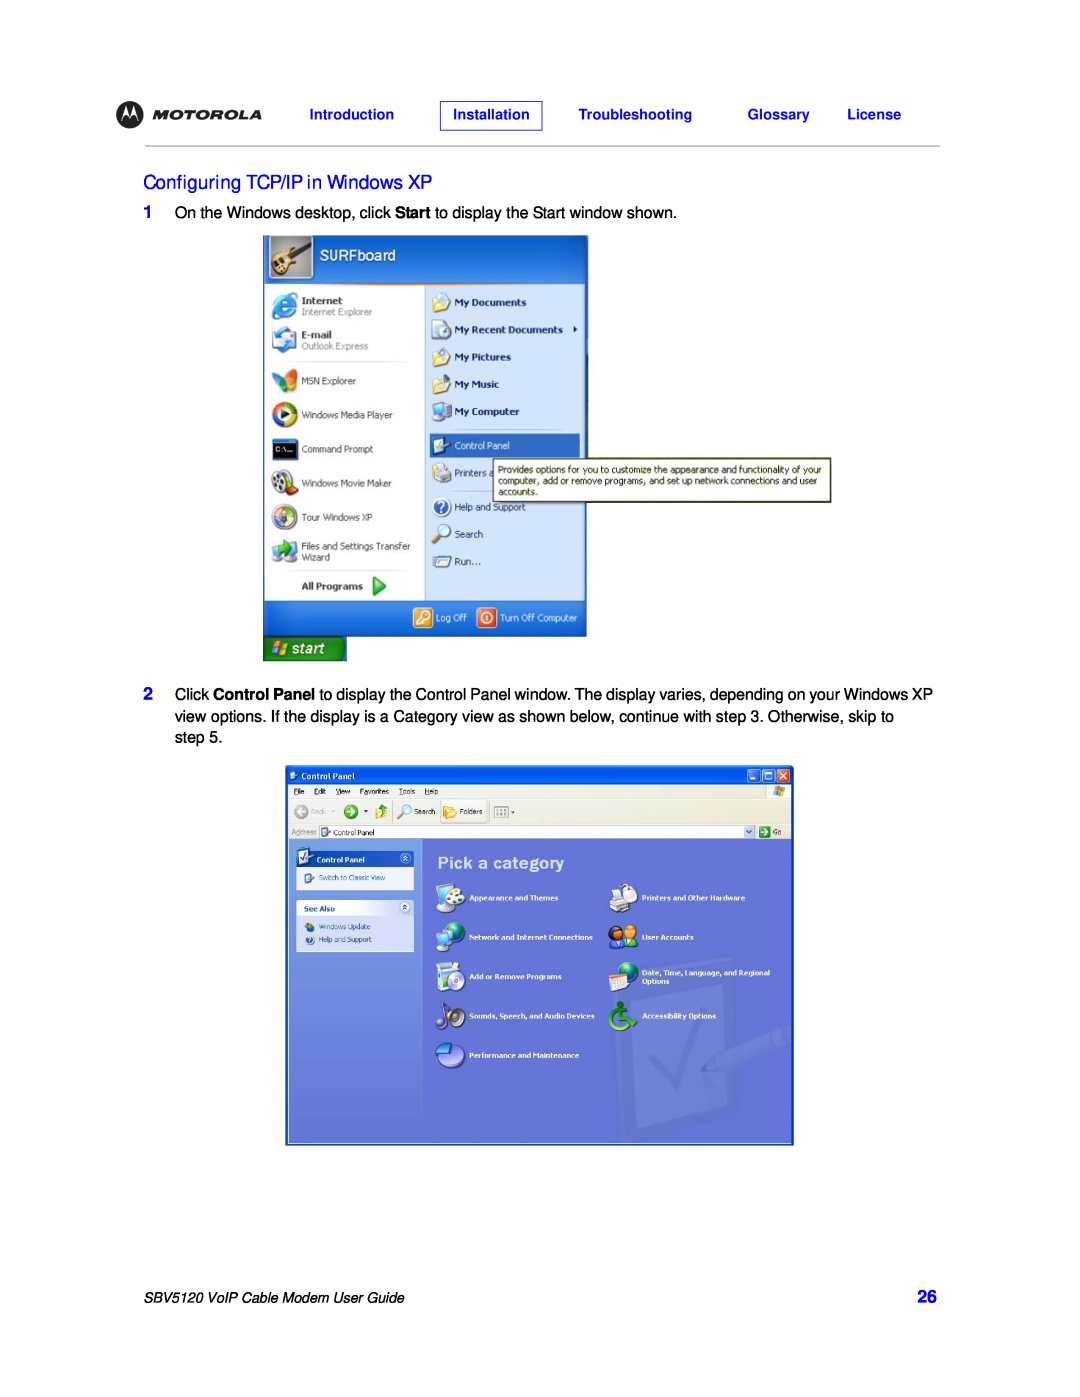 Motorola SBV5120 manual Configuring TCP/IP in Windows XP 